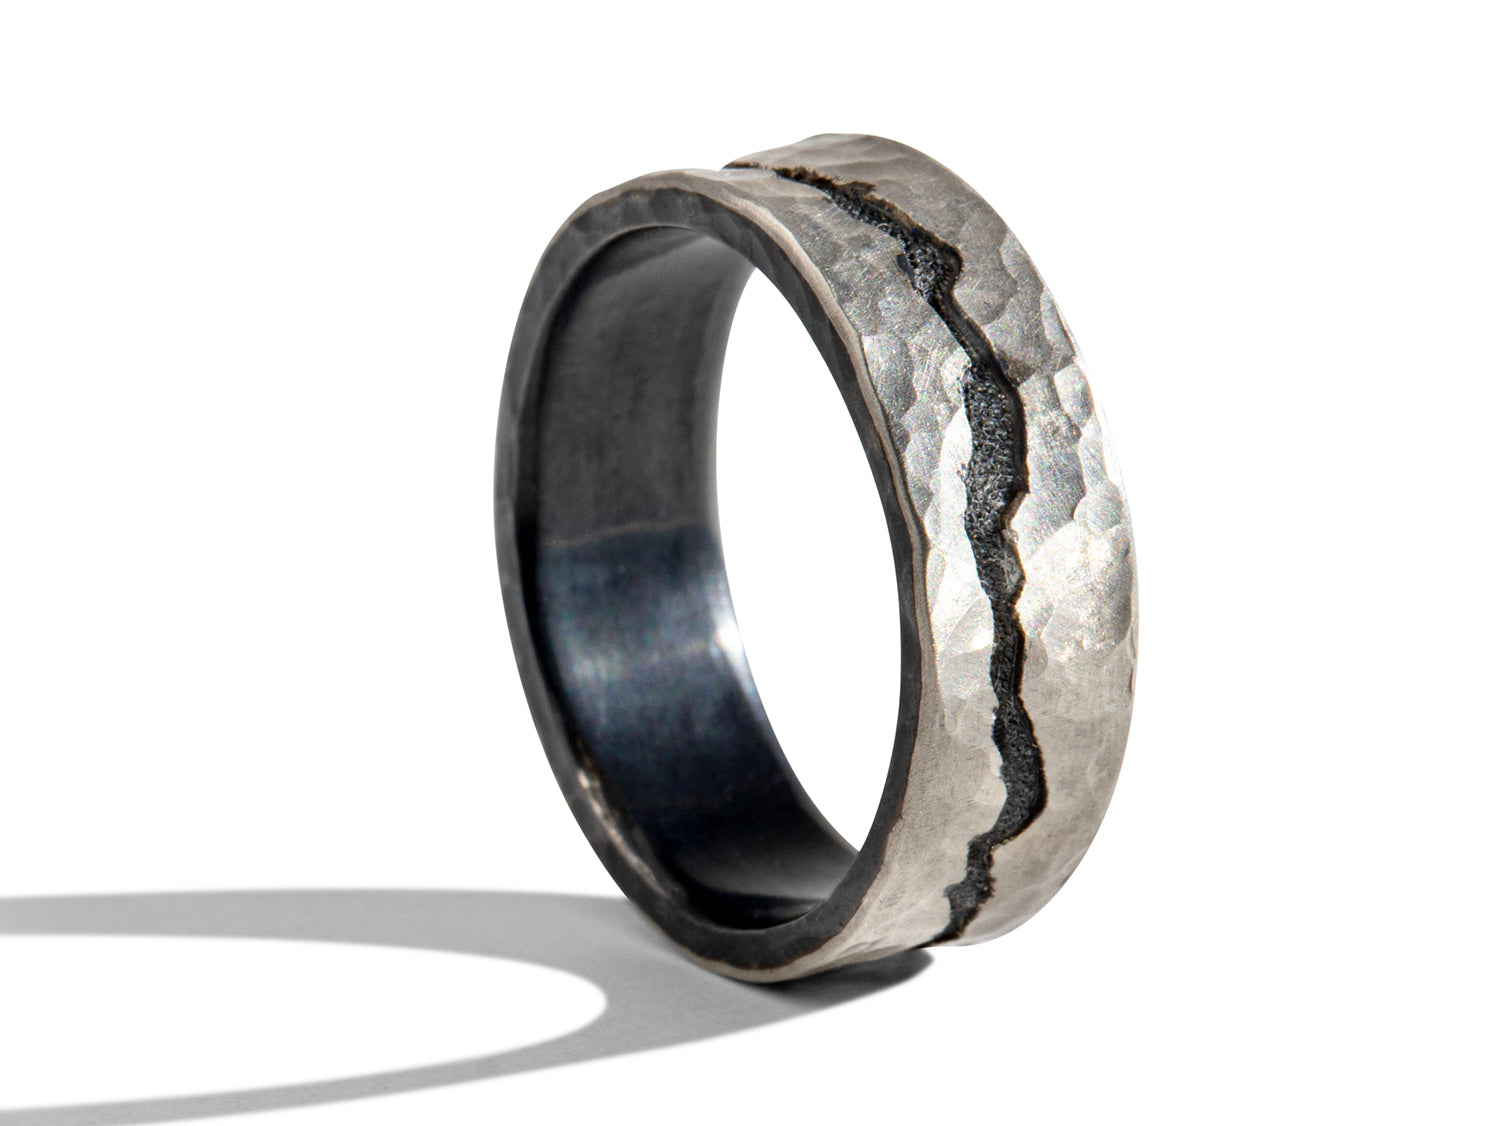 Un Lado Asi Koa Wood with Recycled Sterling Silver Wedding Ring |  Naturaleza Organic – Naturaleza Organic Jewelry & Wood Rings